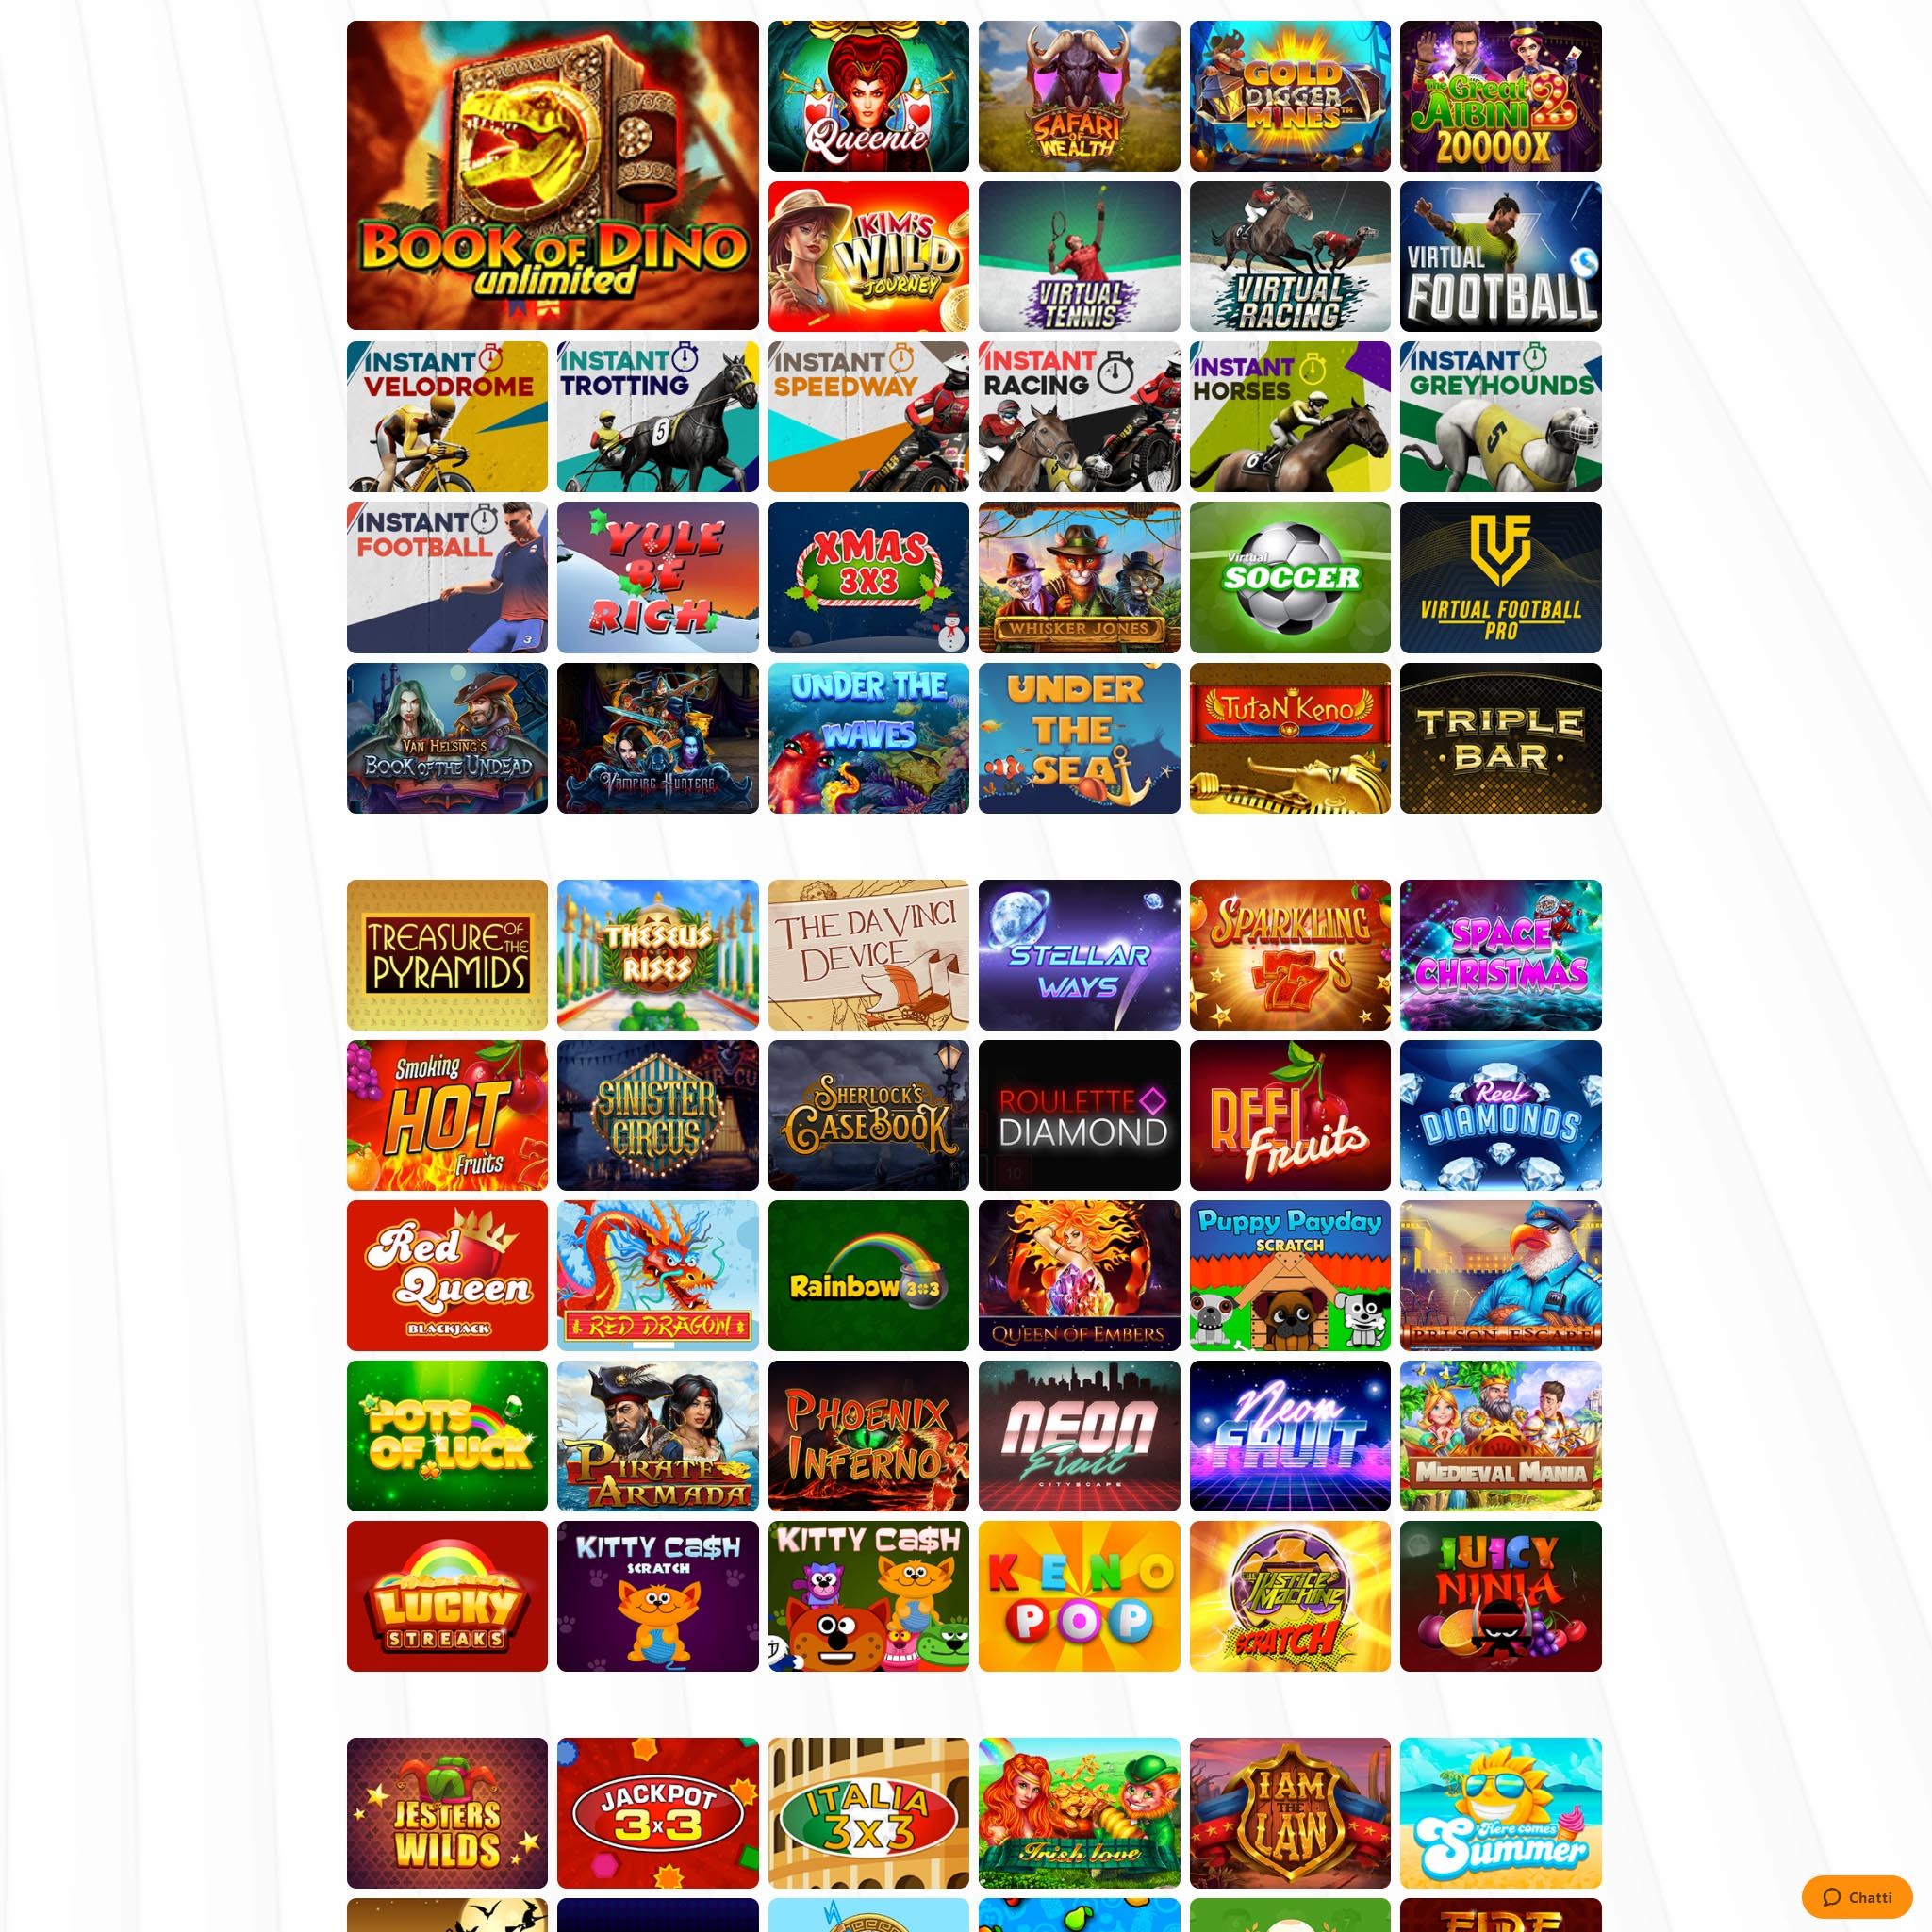 Flaming Casino full games catalogue